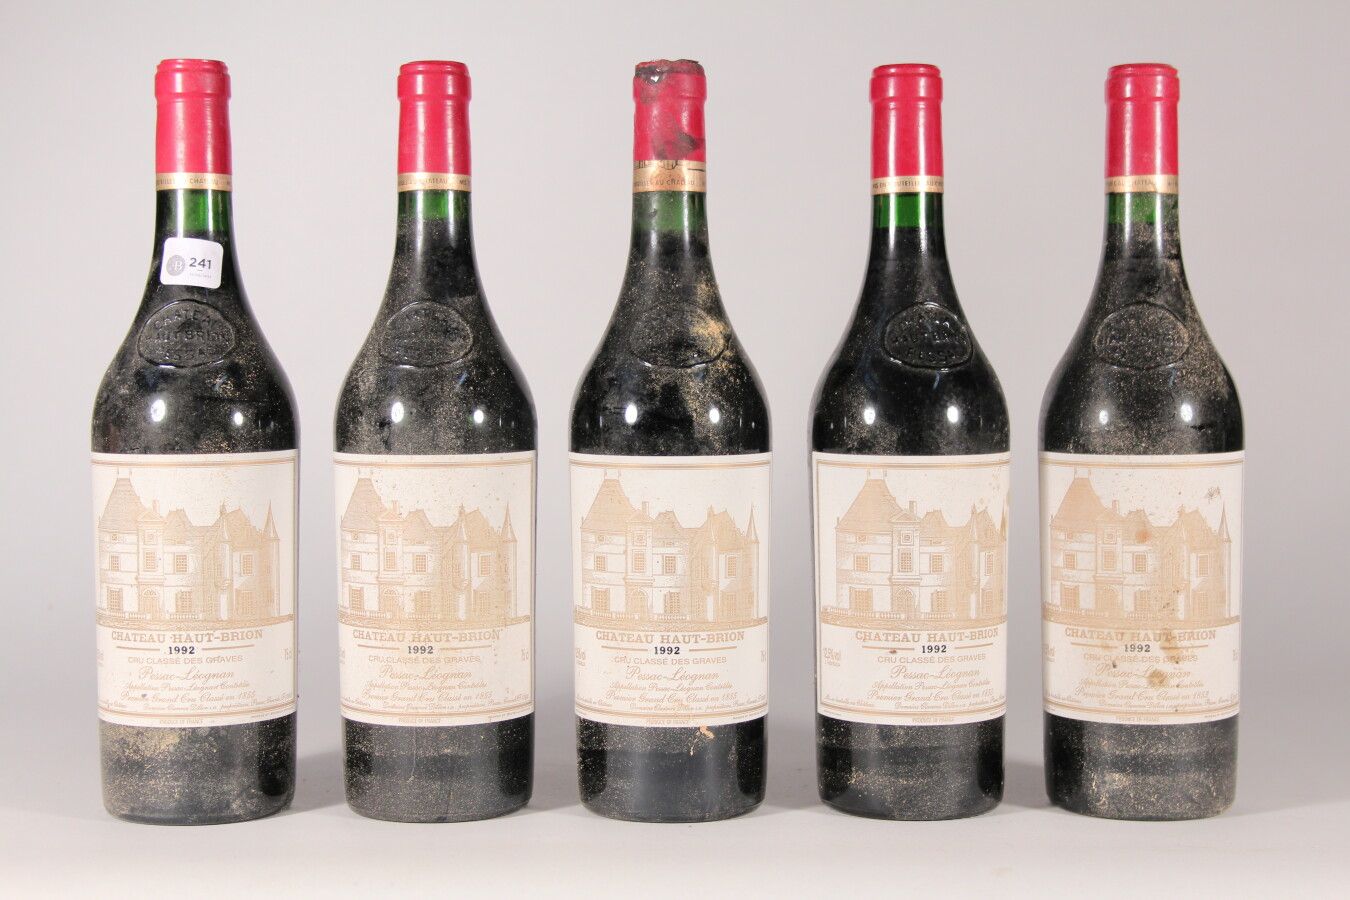 Null 1992 - Château Haut Brion

Pessac-Léognan Red - 5 bottles